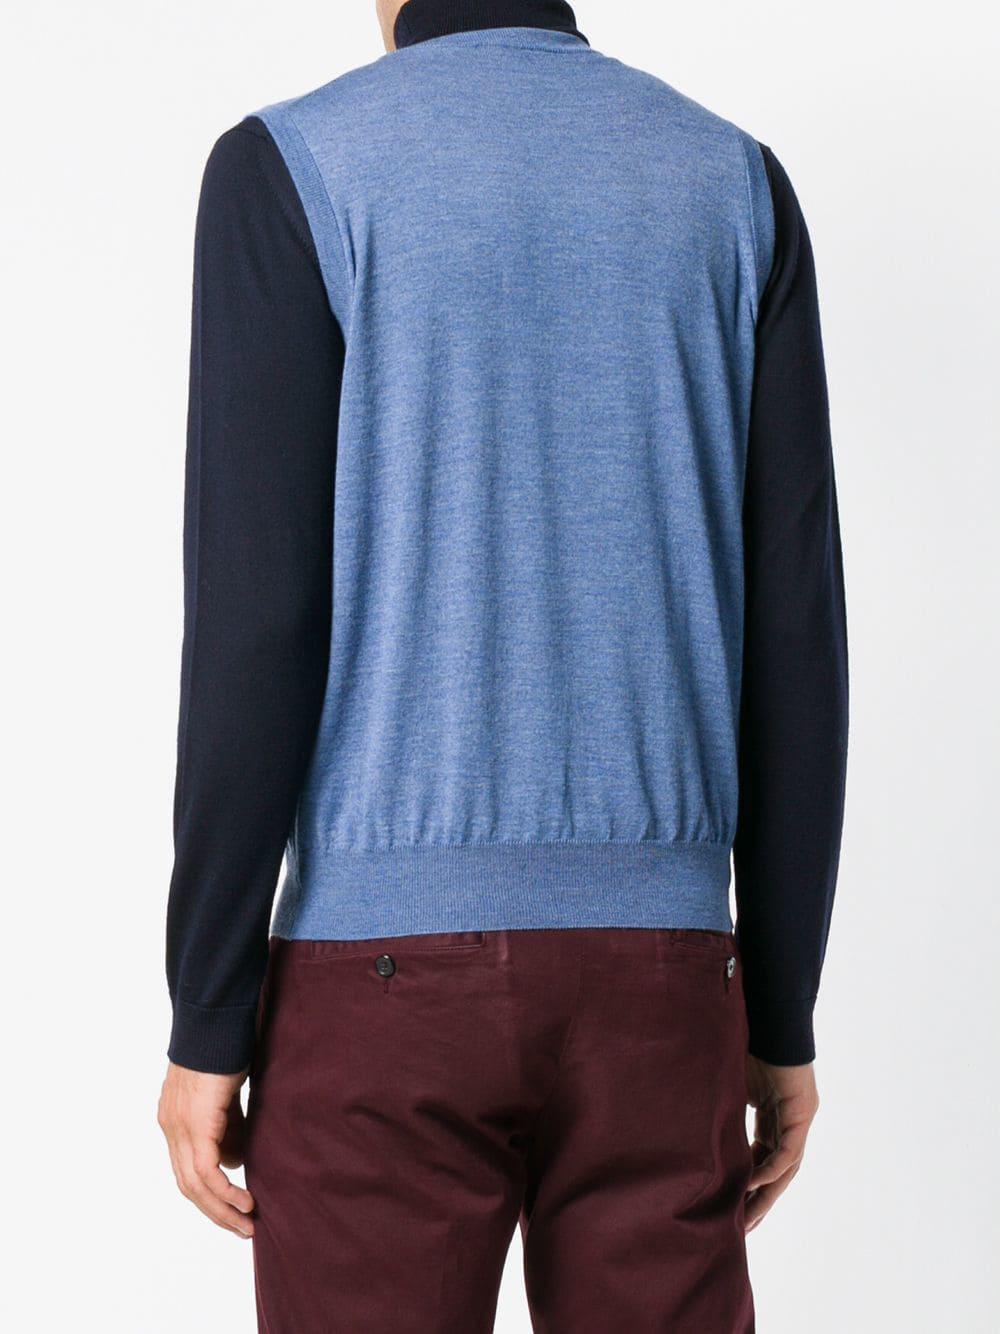 Canali V-neck Sleeveless Sweater in Blue for Men - Lyst